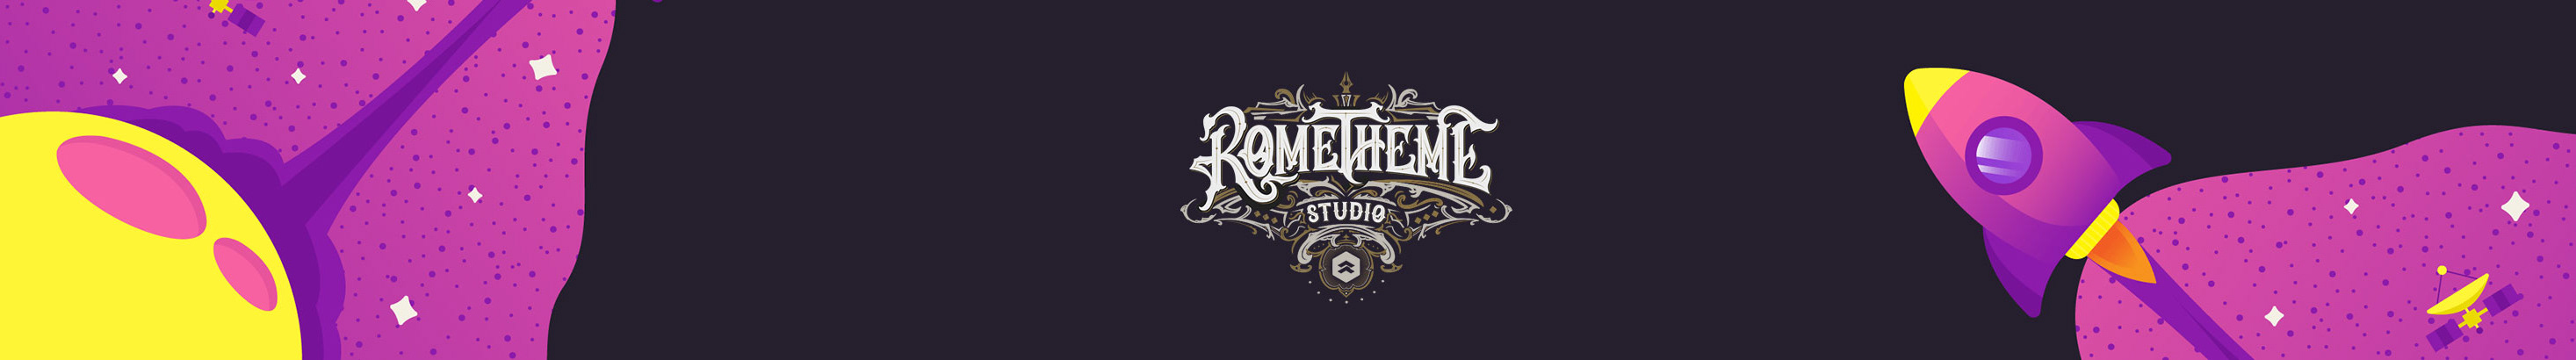 Banner de perfil de Rometheme Studio